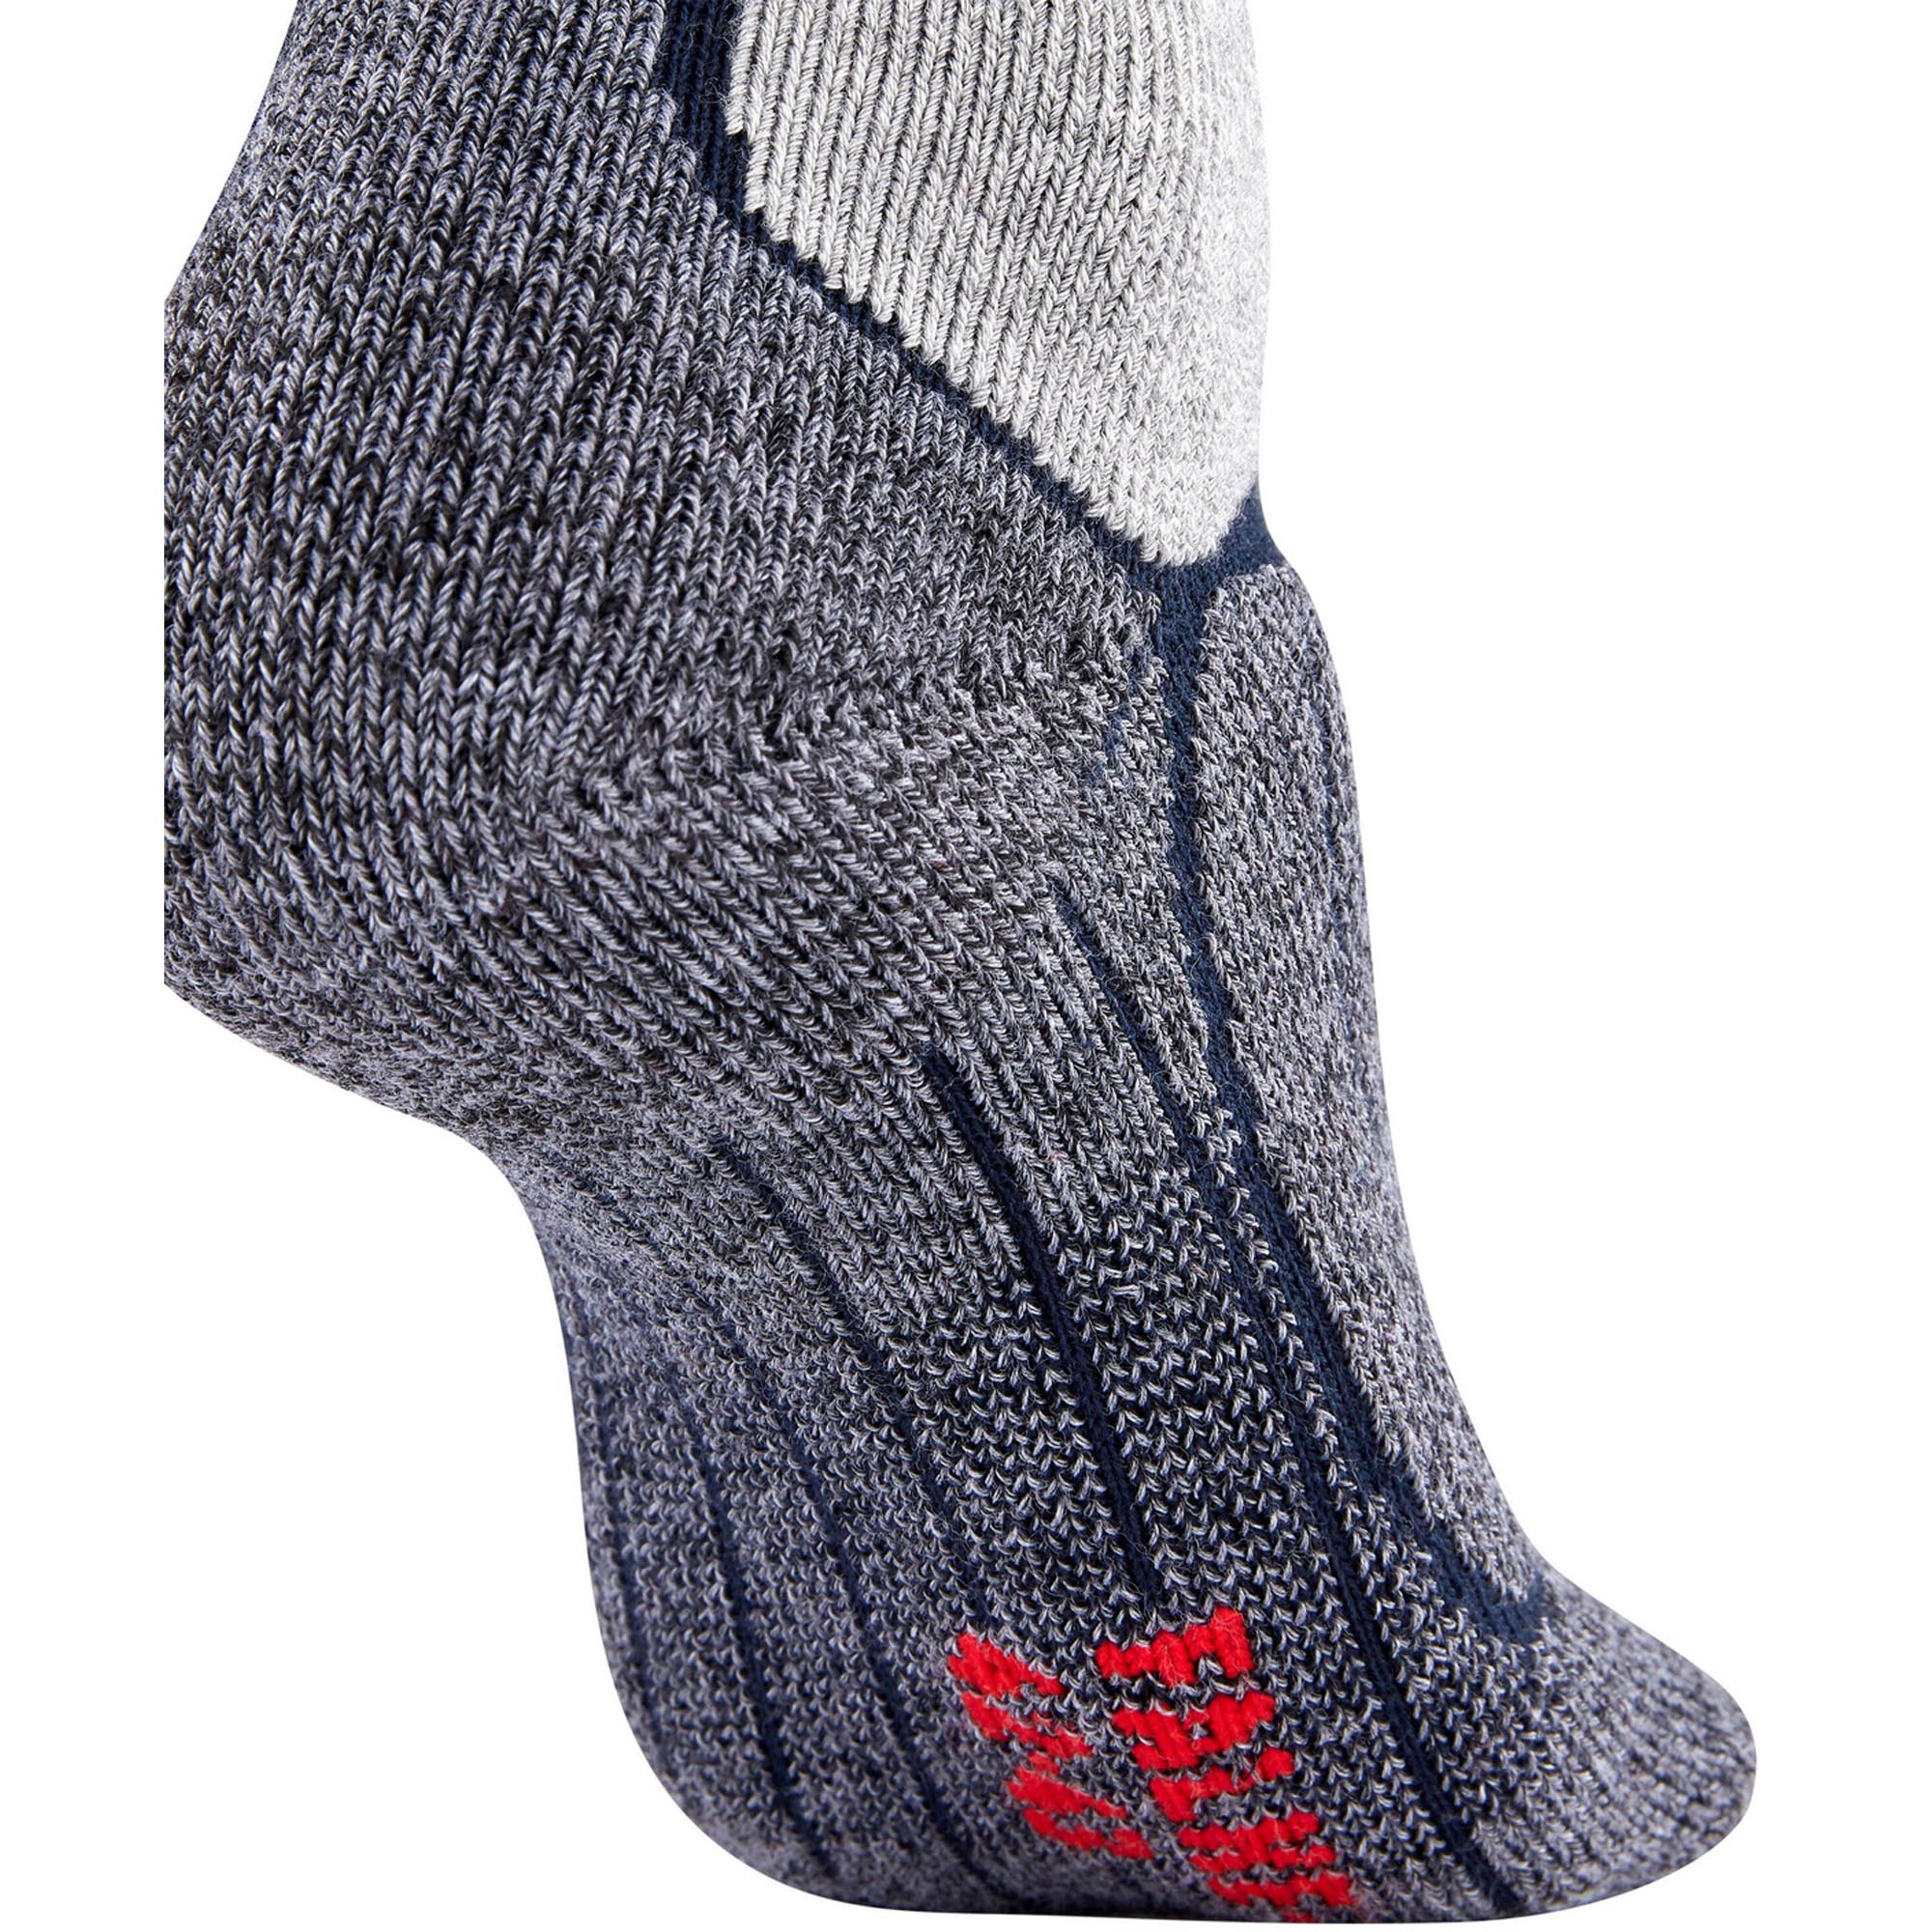 Falke SK1 Merino Wool Ski Socks